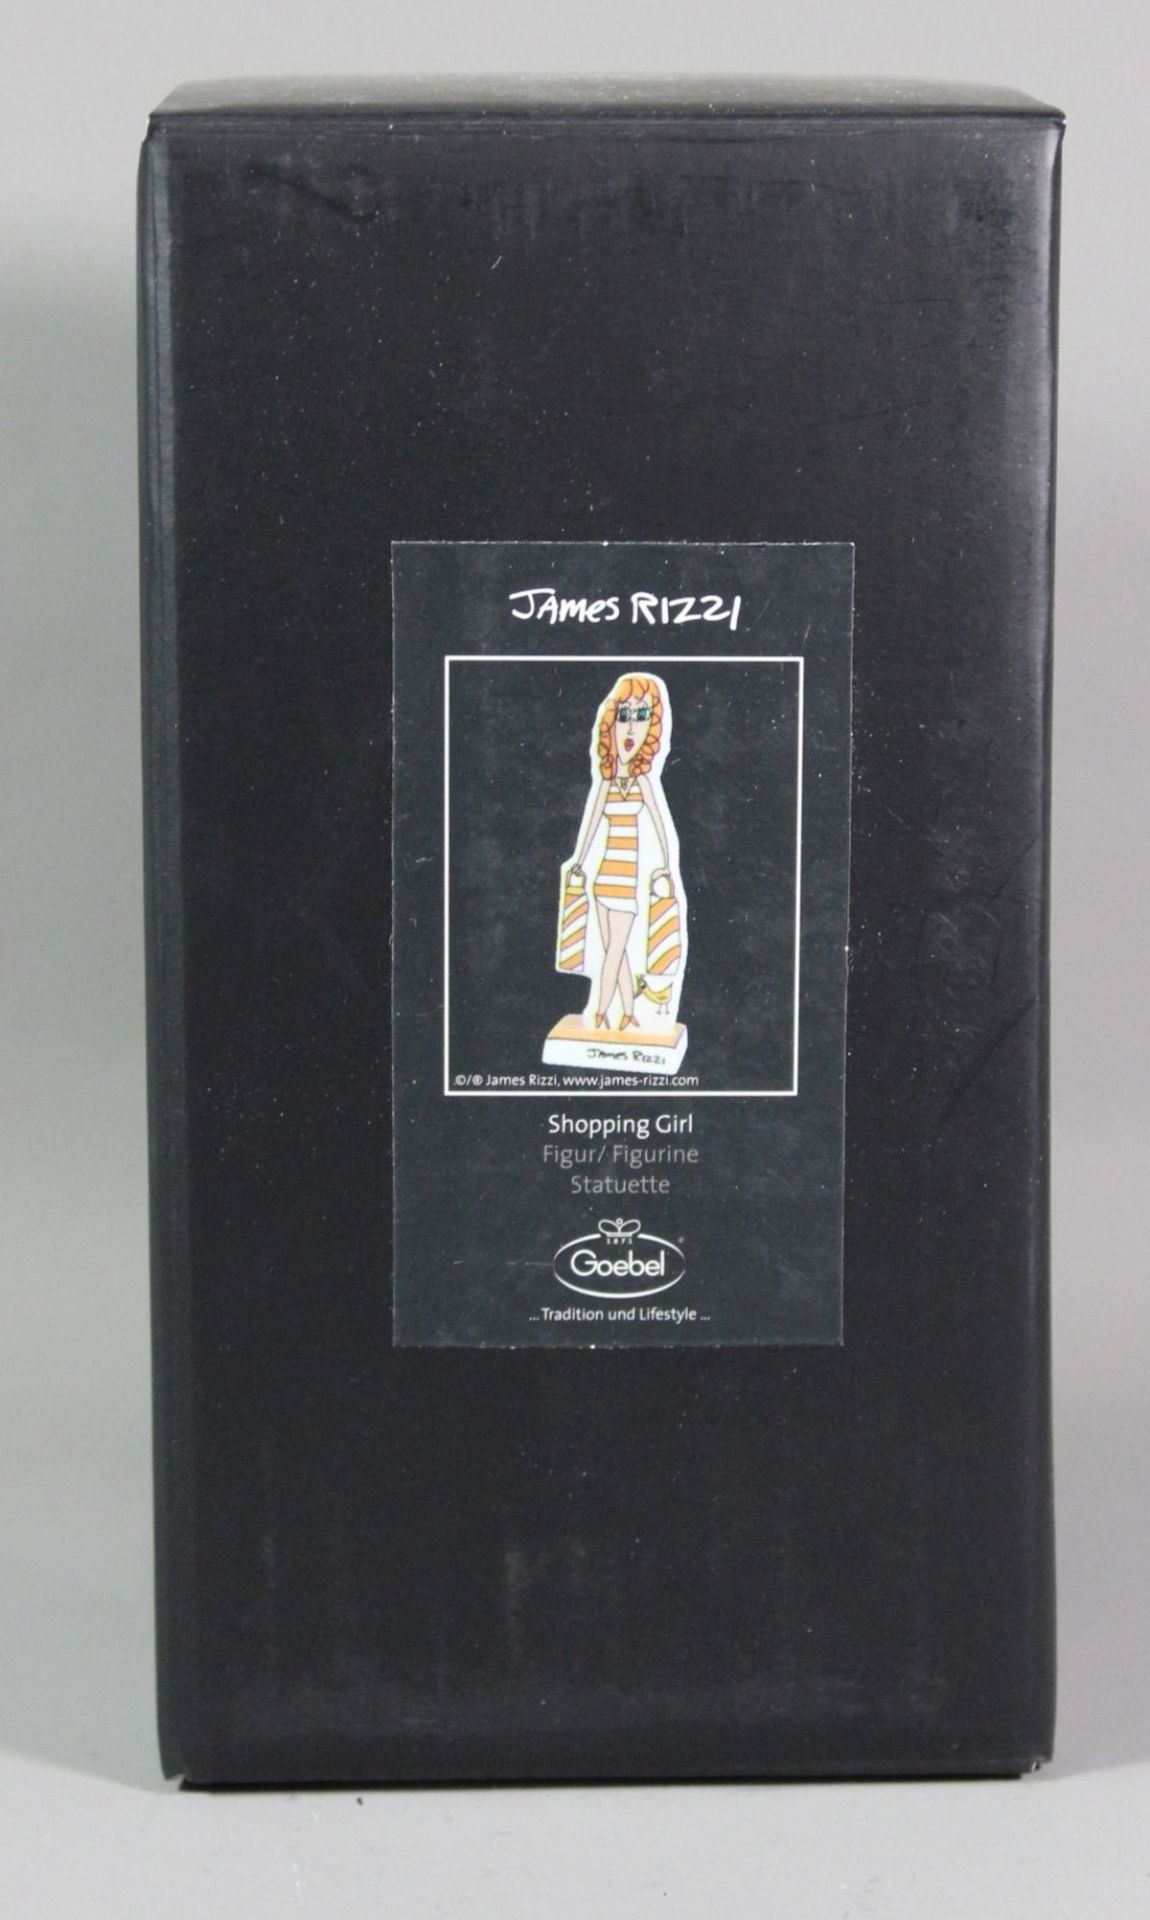 Goebel-Figur "Shopping Girl", Artis Orbis, Entw. James Rizzi, orig. Karton, ca. H-13,5cm. - Bild 3 aus 3